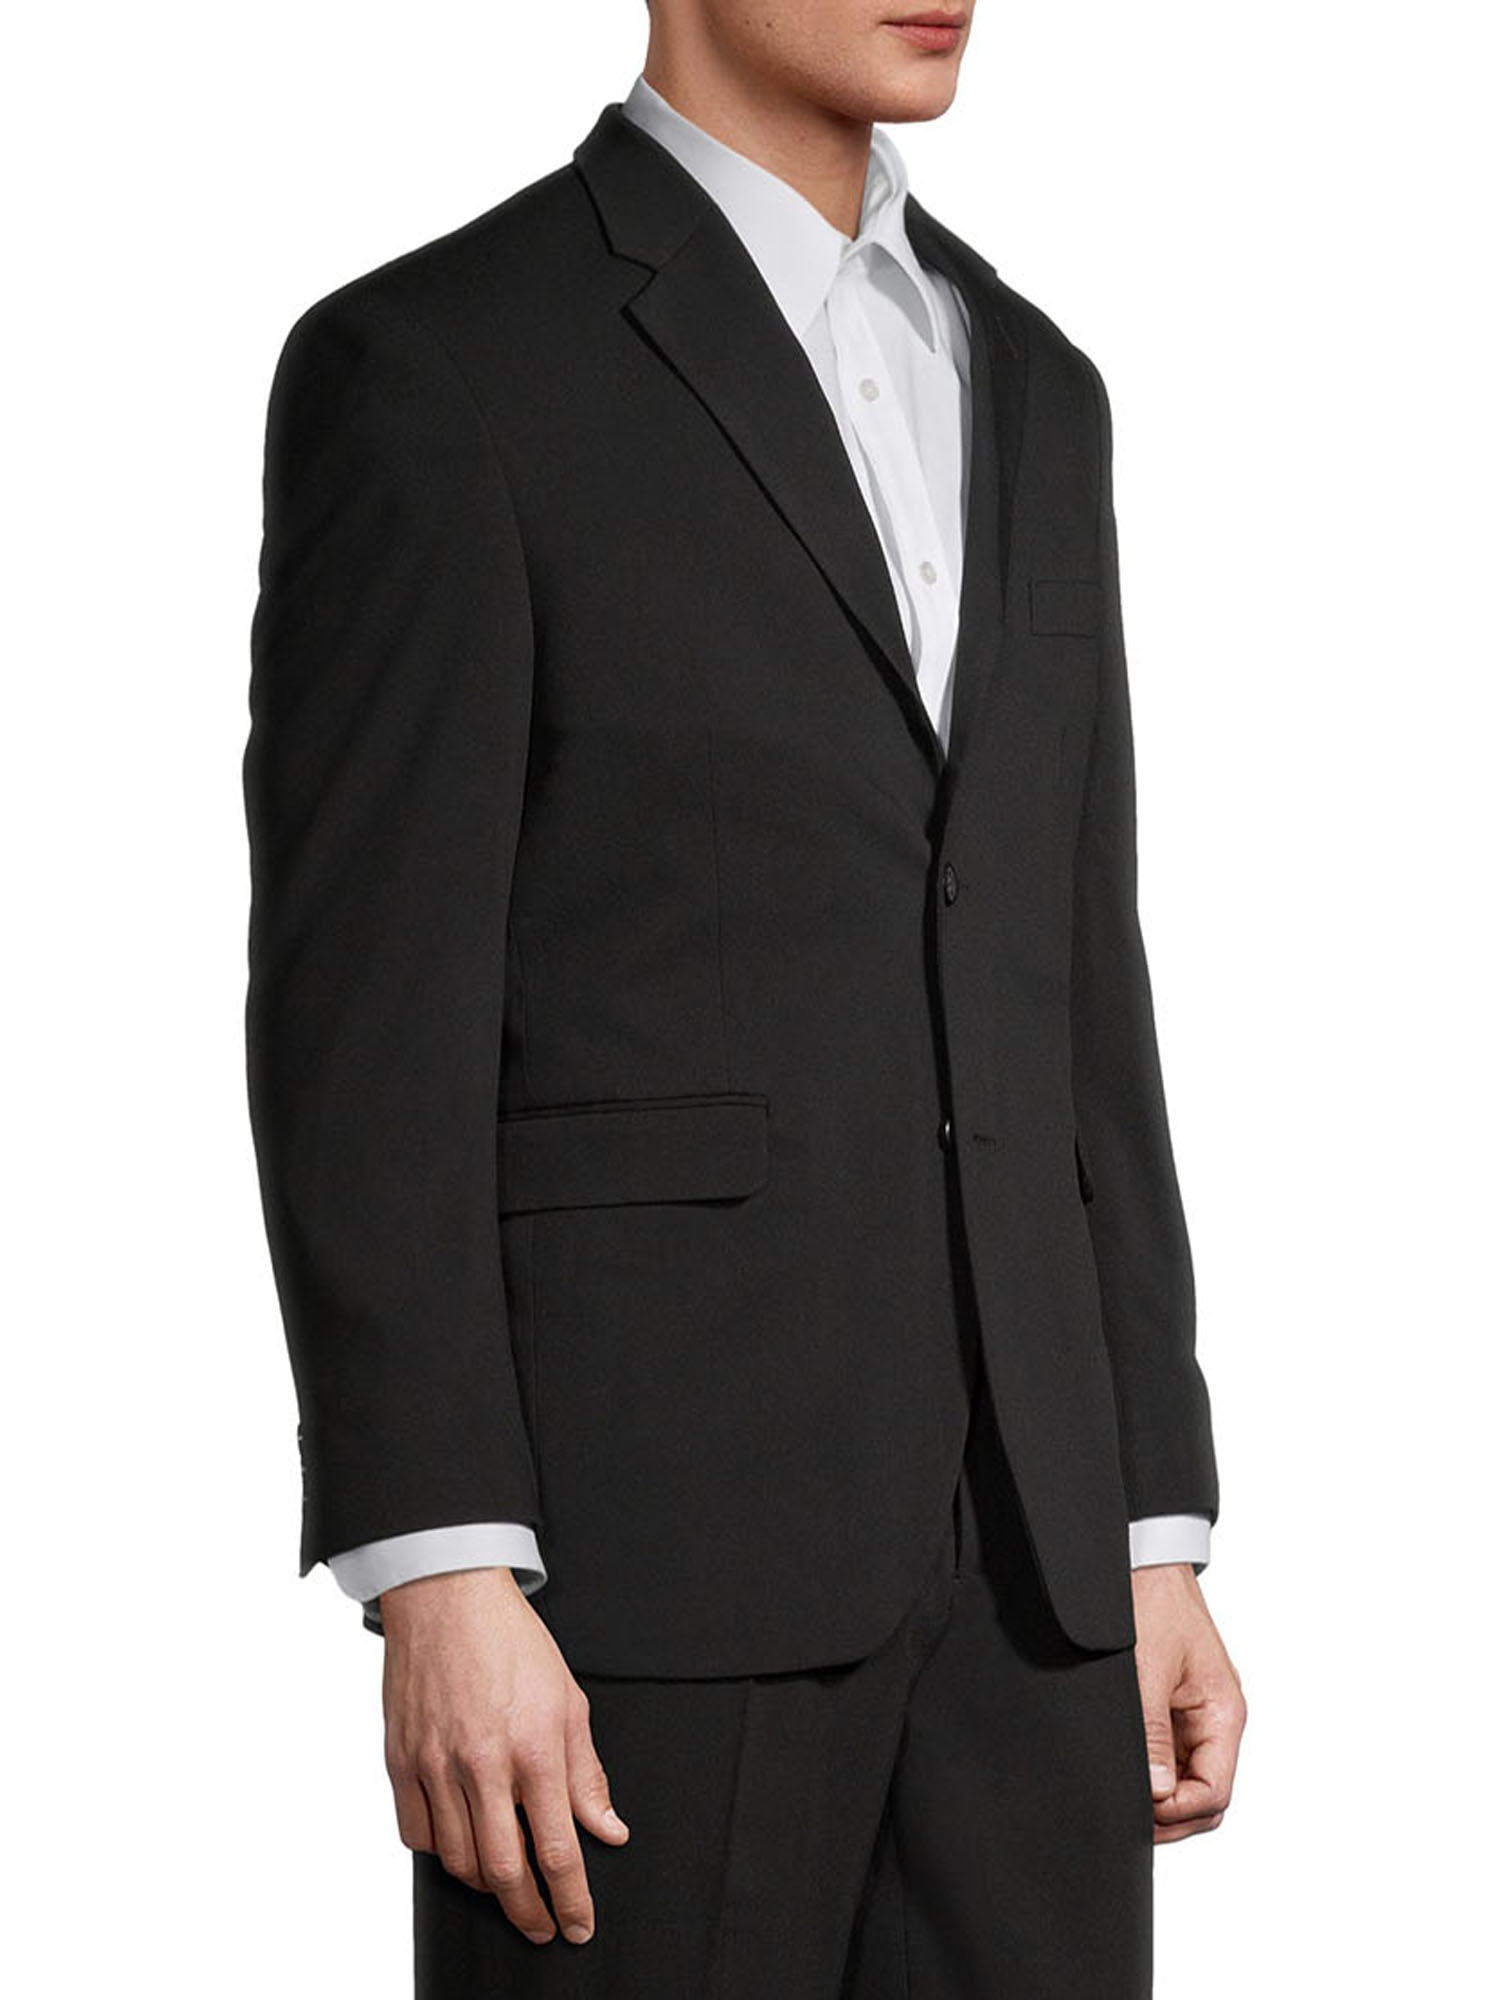 George Men's Performance Comfort Flex Suit Jacket - image 4 of 6